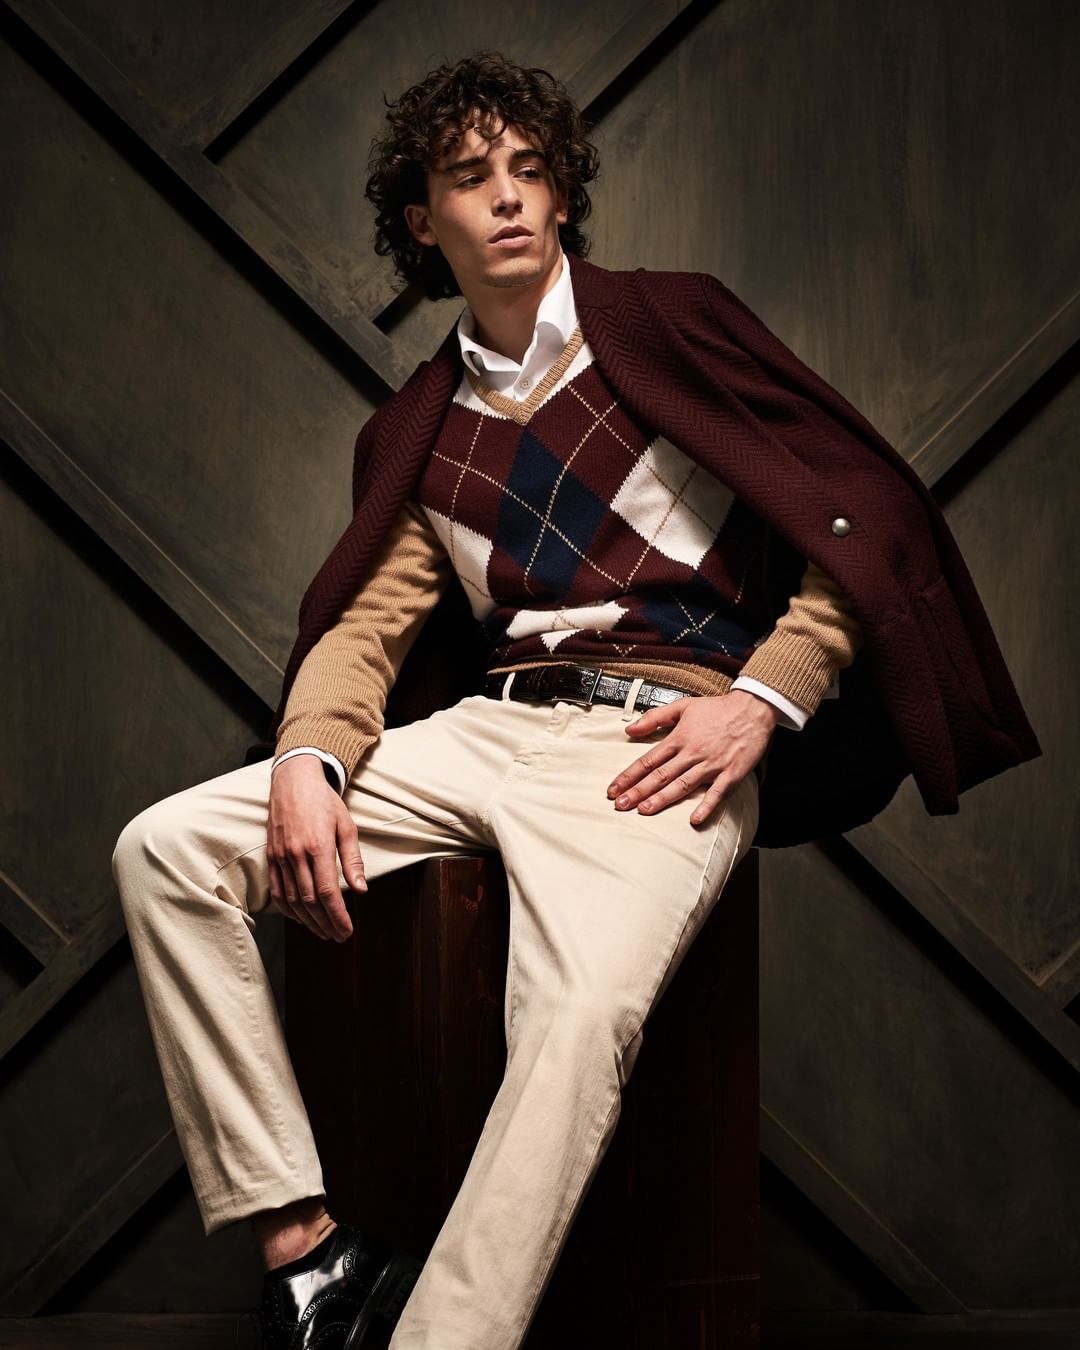 Maglificio Gran Sasso - British style, get inspired by the look! Discover more > shop.gransasso.it

#GranSasso #WearGranSasso #FW20